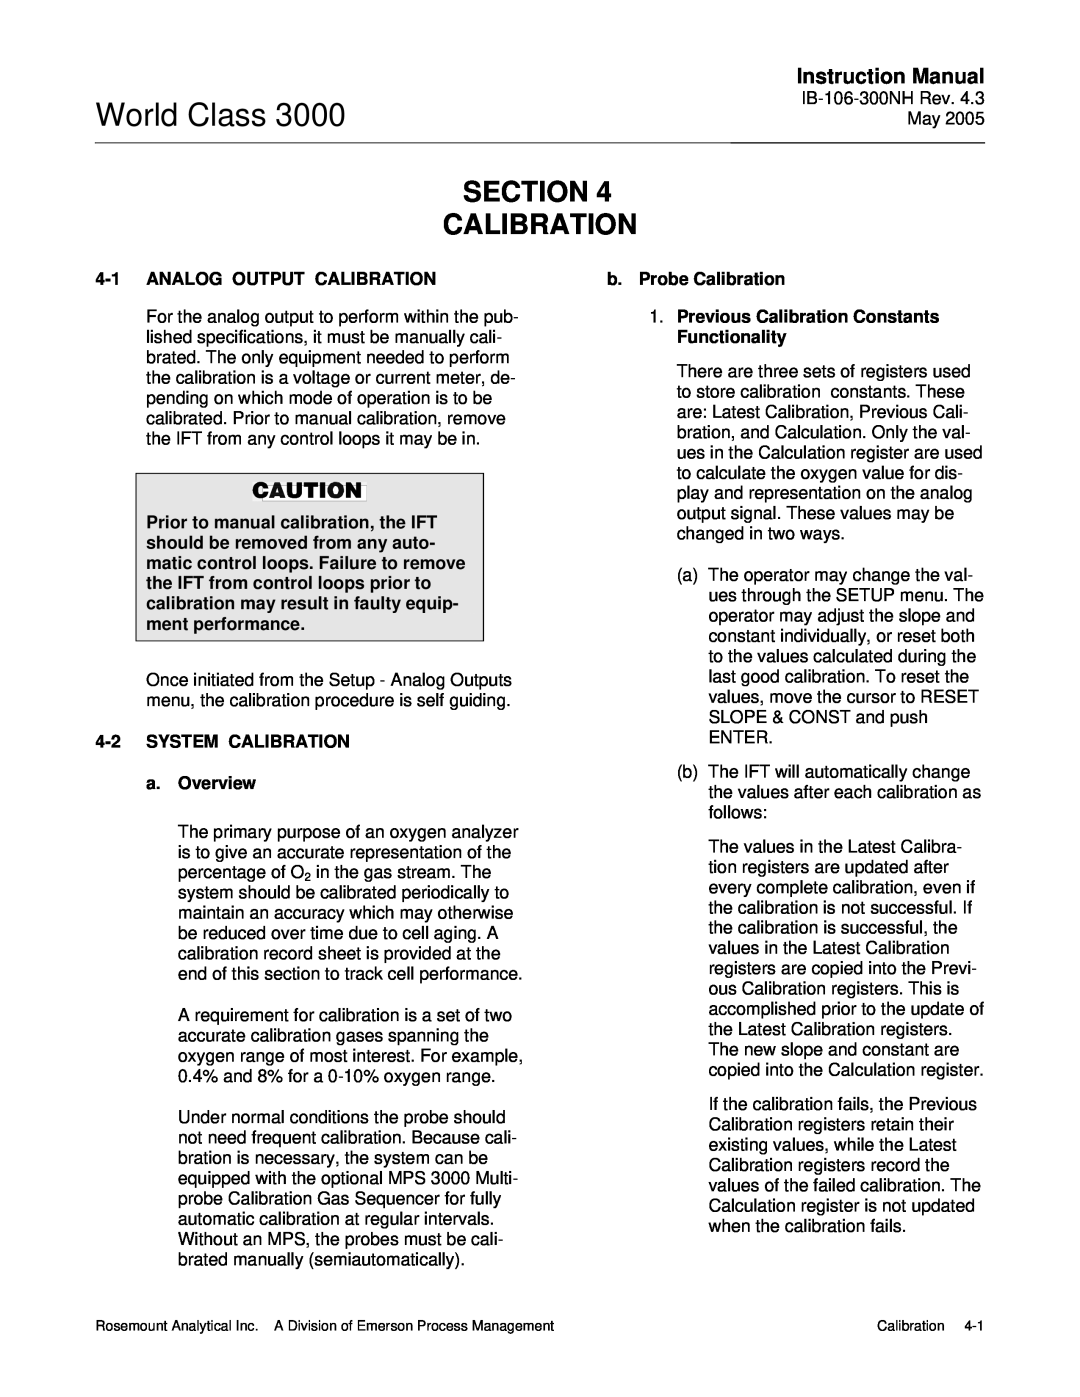 Emerson 3000 Calibration, World Class, Instruction Manual, 4-1ANALOG OUTPUT CALIBRATION, 4-2SYSTEM CALIBRATION a.Overview 